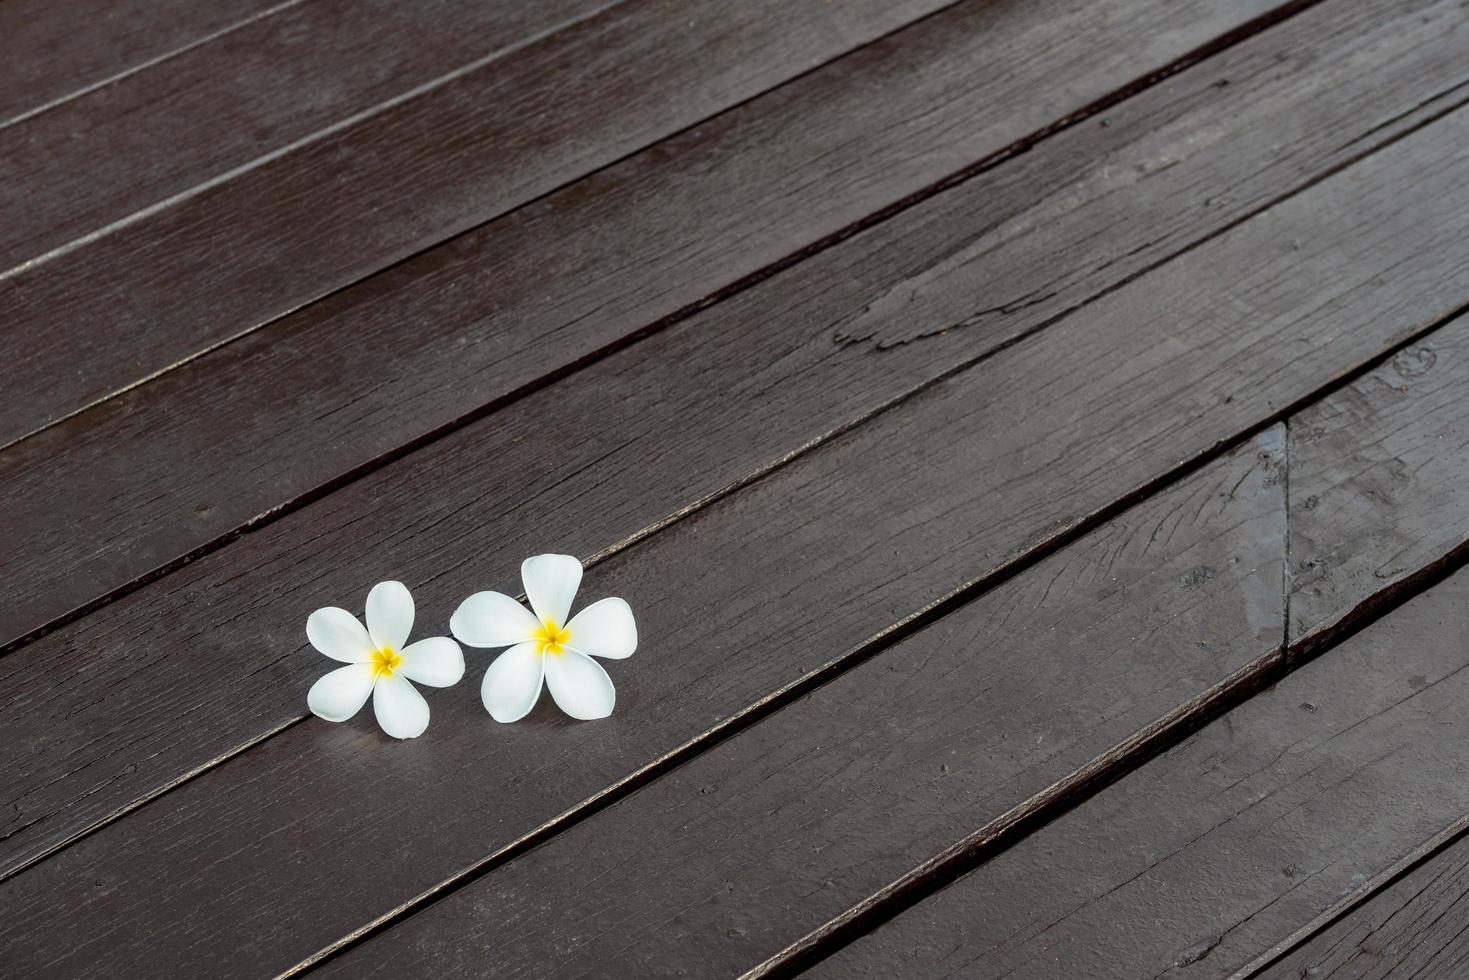 Plumeria flower on wood texture photo